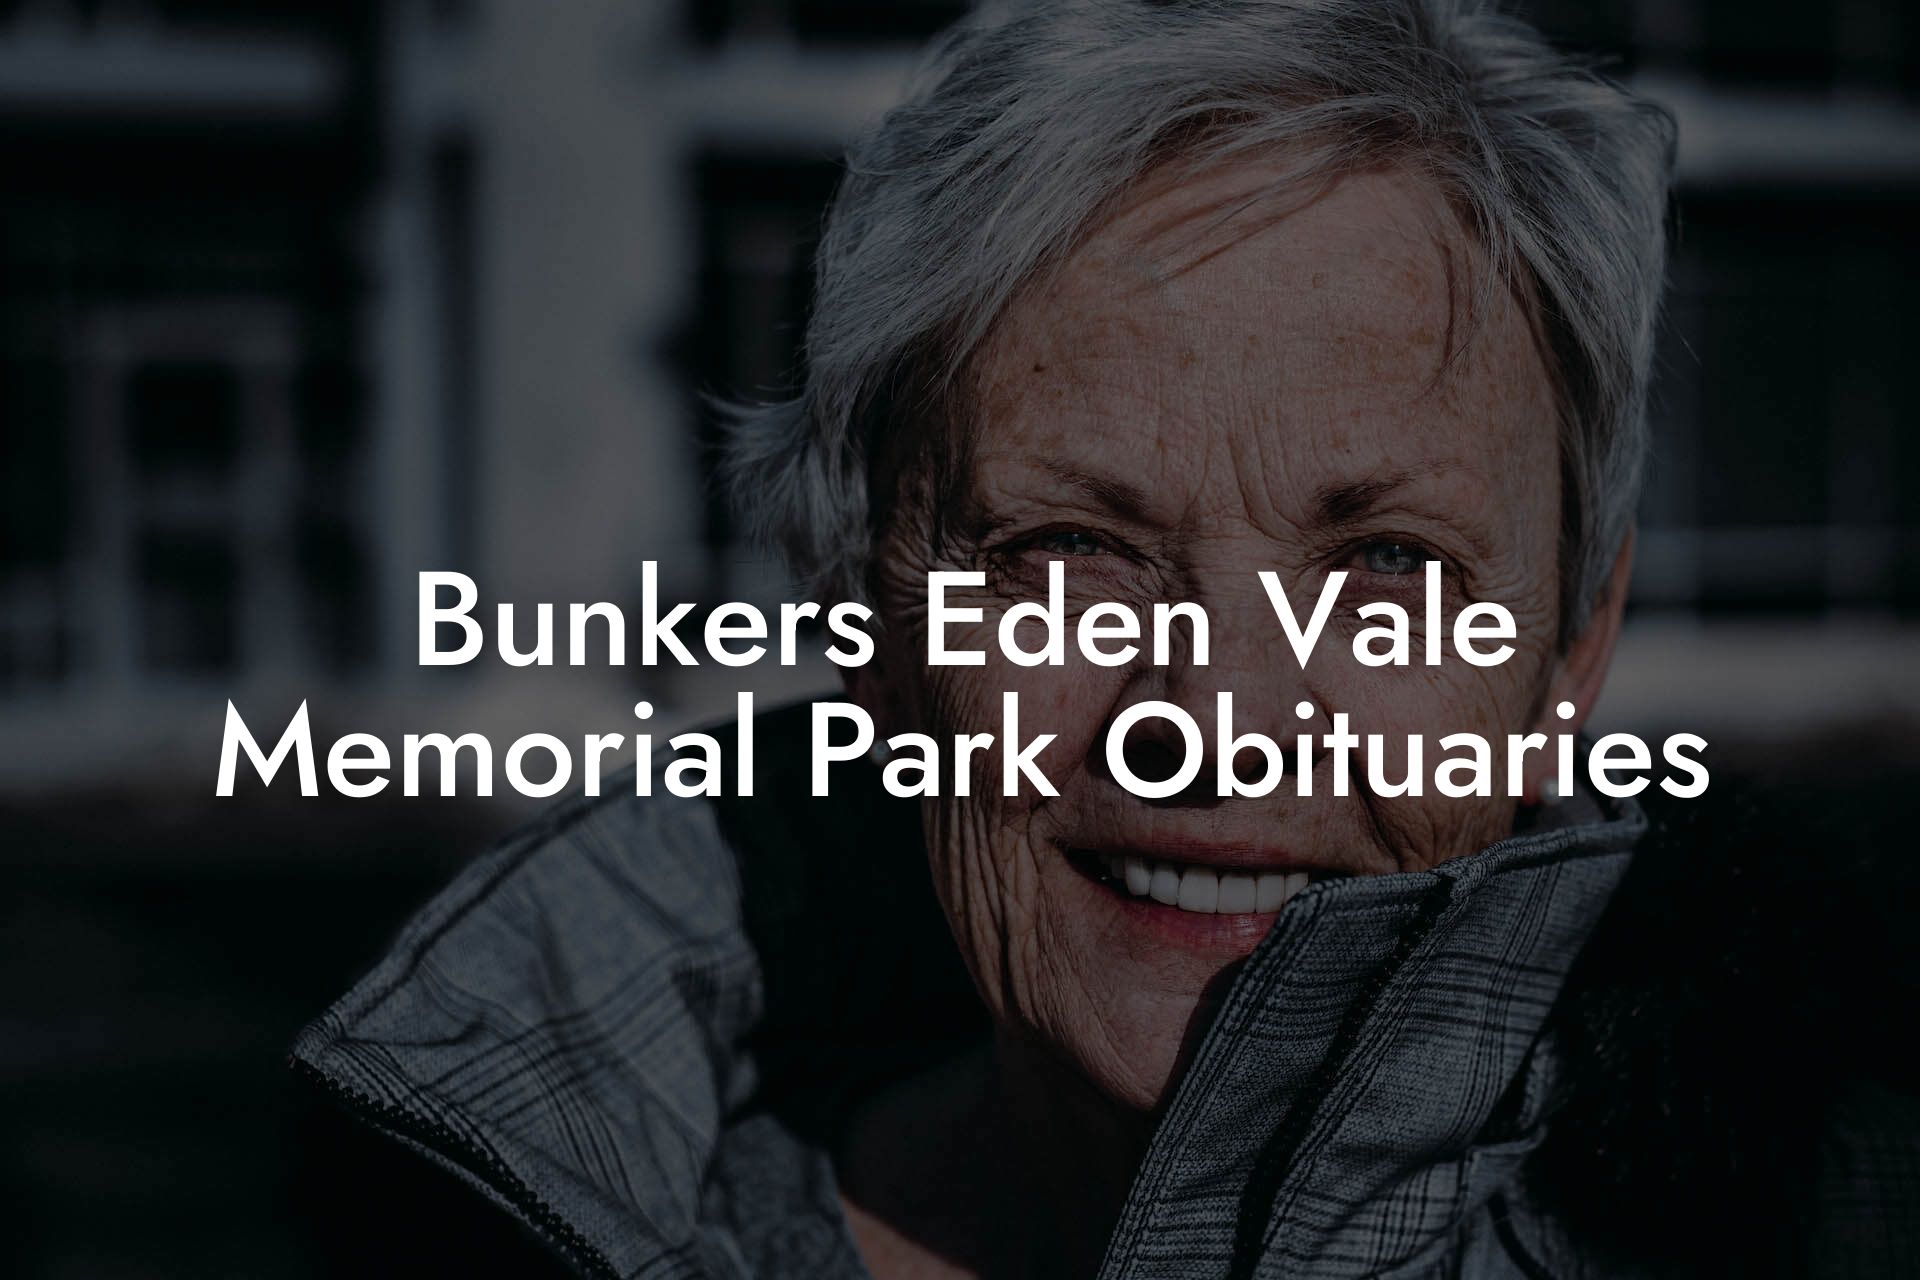 Bunkers Eden Vale Memorial Park Obituaries